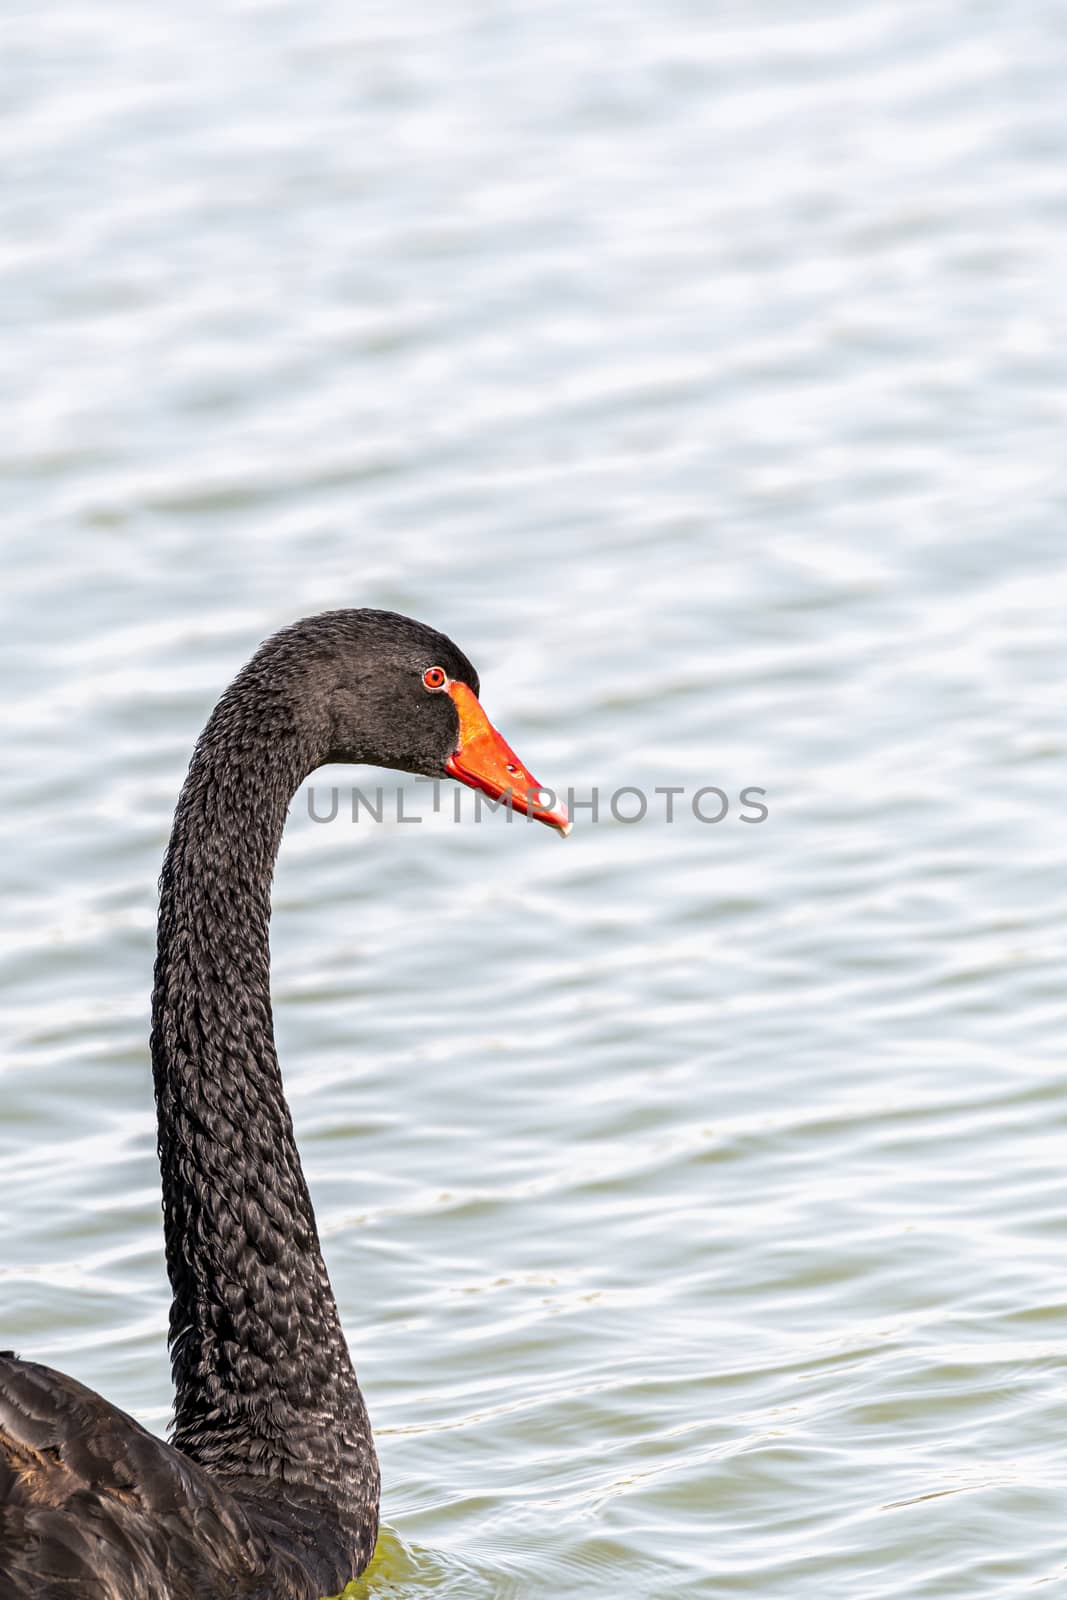 Black swan, Al Qudra Lakes, Dubai, United Arab Emirates (UAE), Middle East, Arabian Peninsula